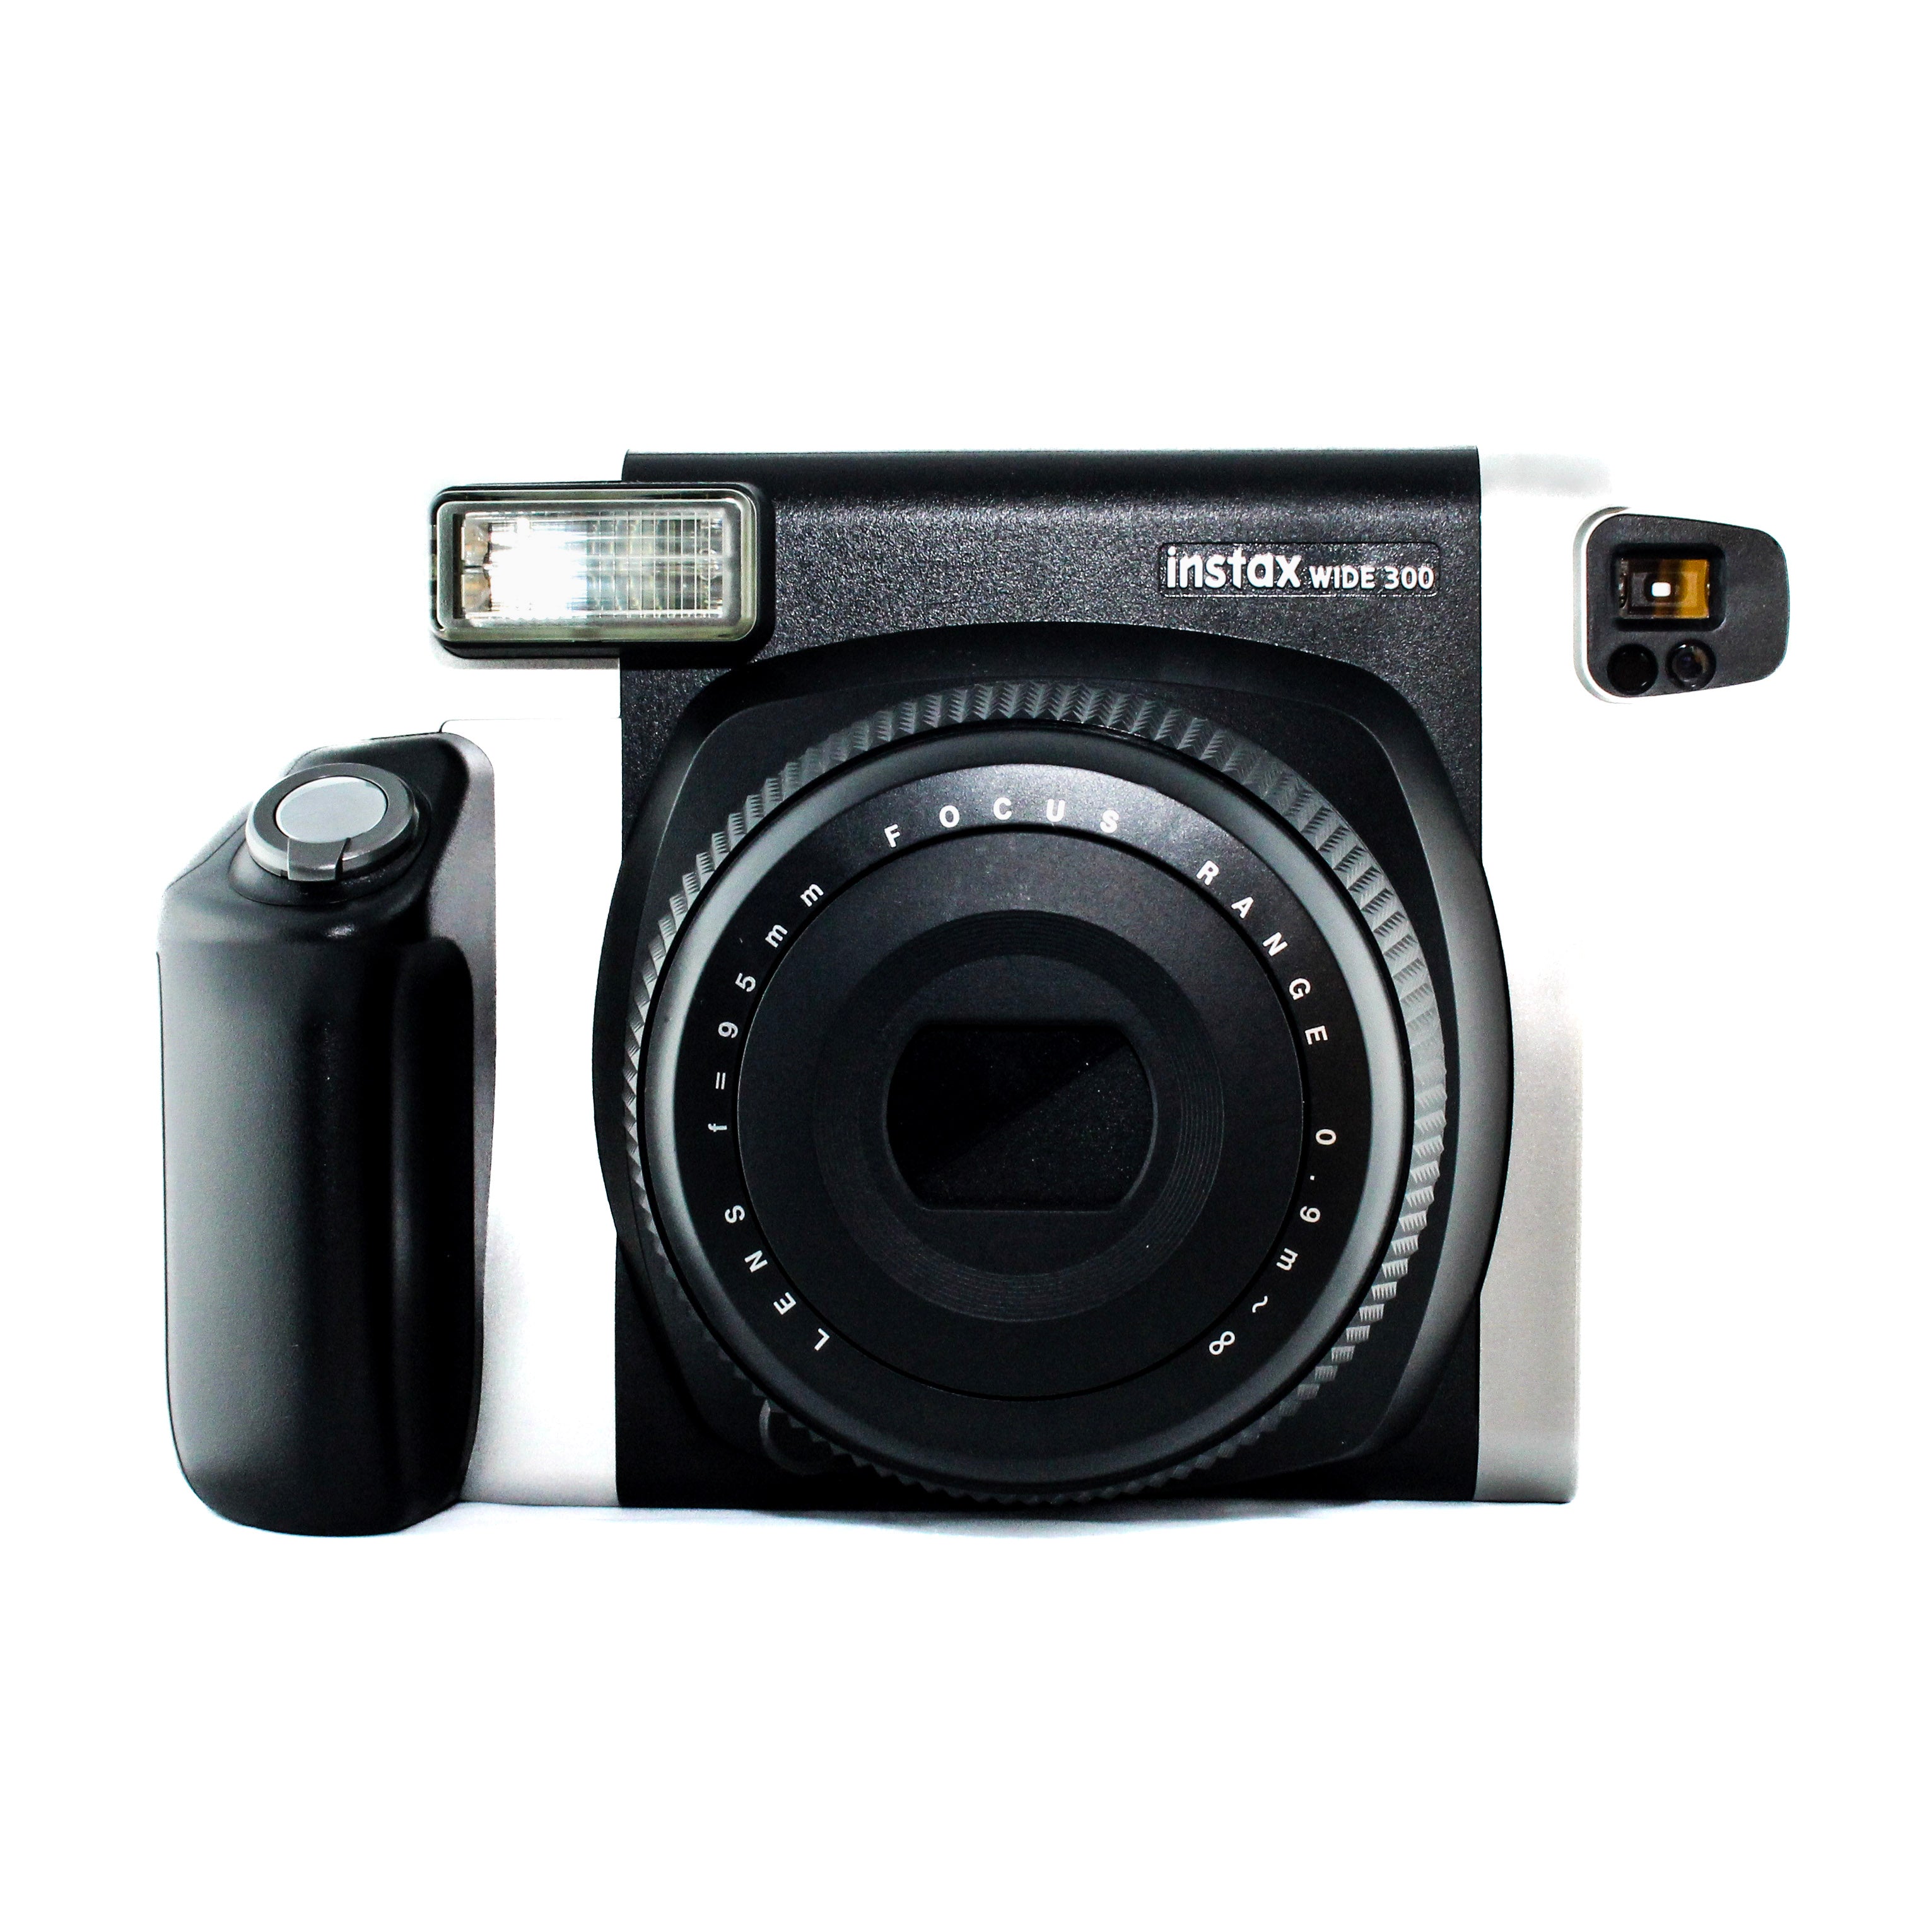 Fujifilm 35mm Film Disposable Camera (Green-Black)